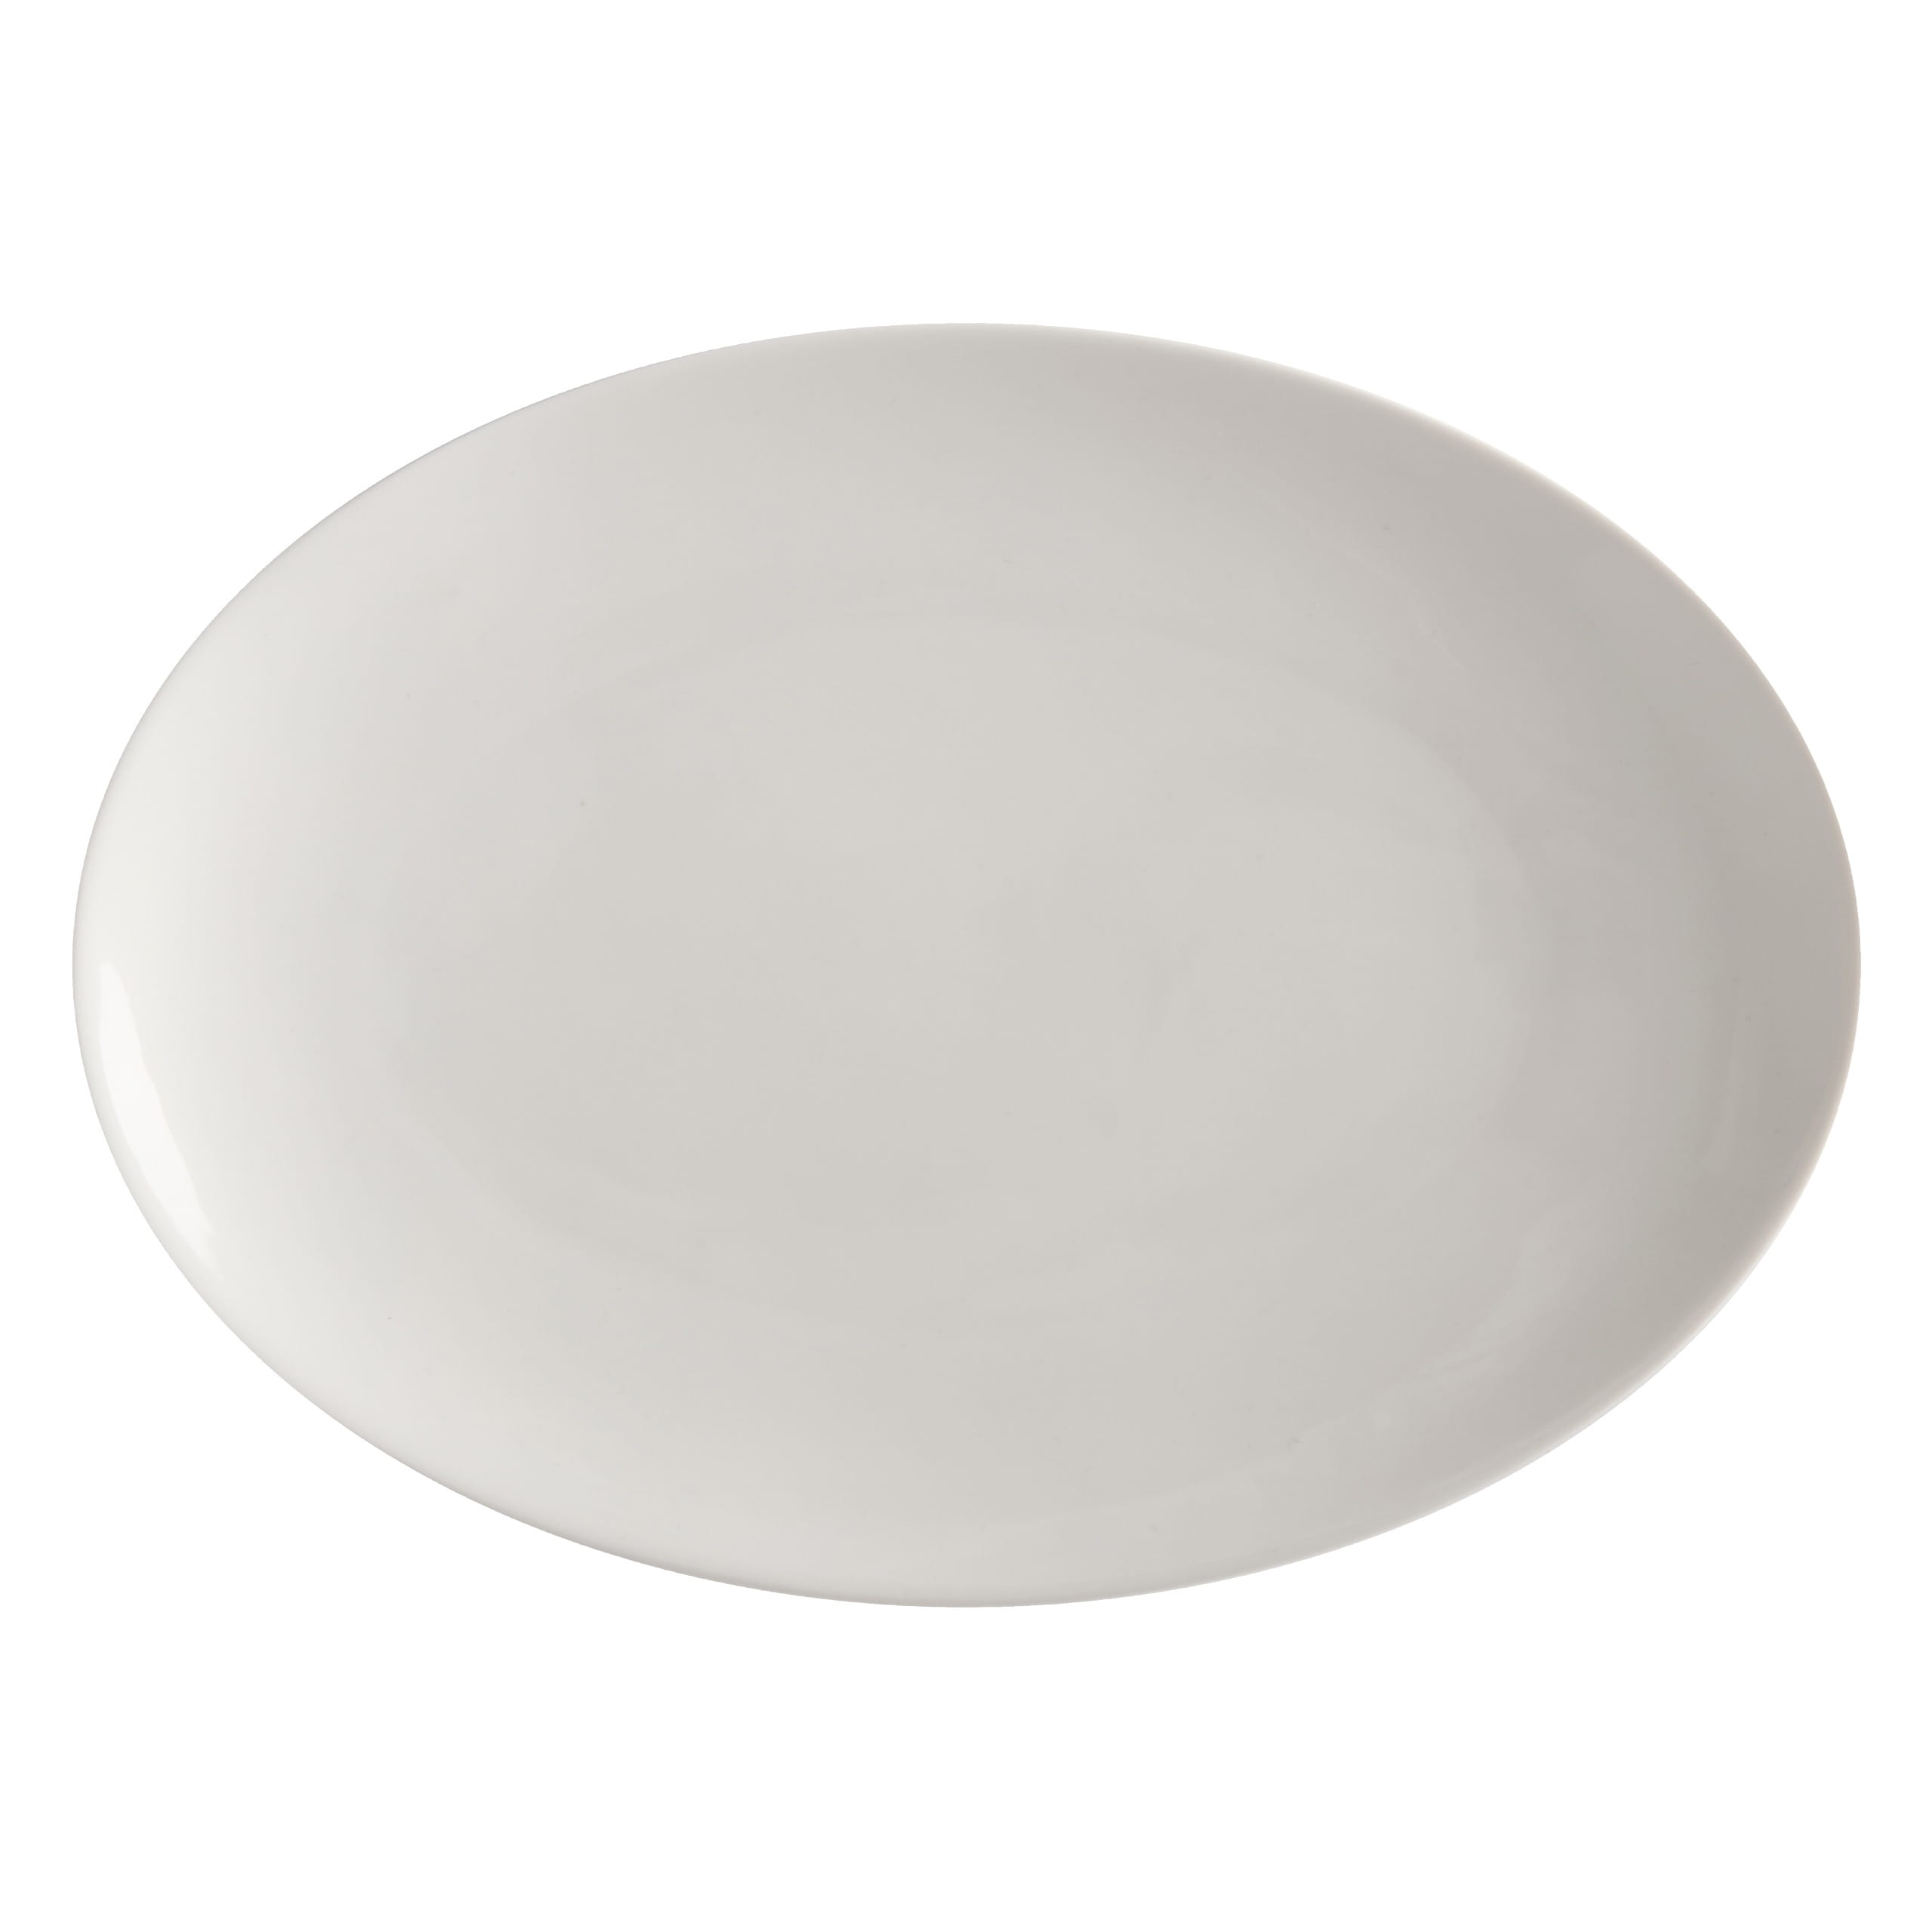 ROUND Platte oval, 30 x 22 cm, Porzellan